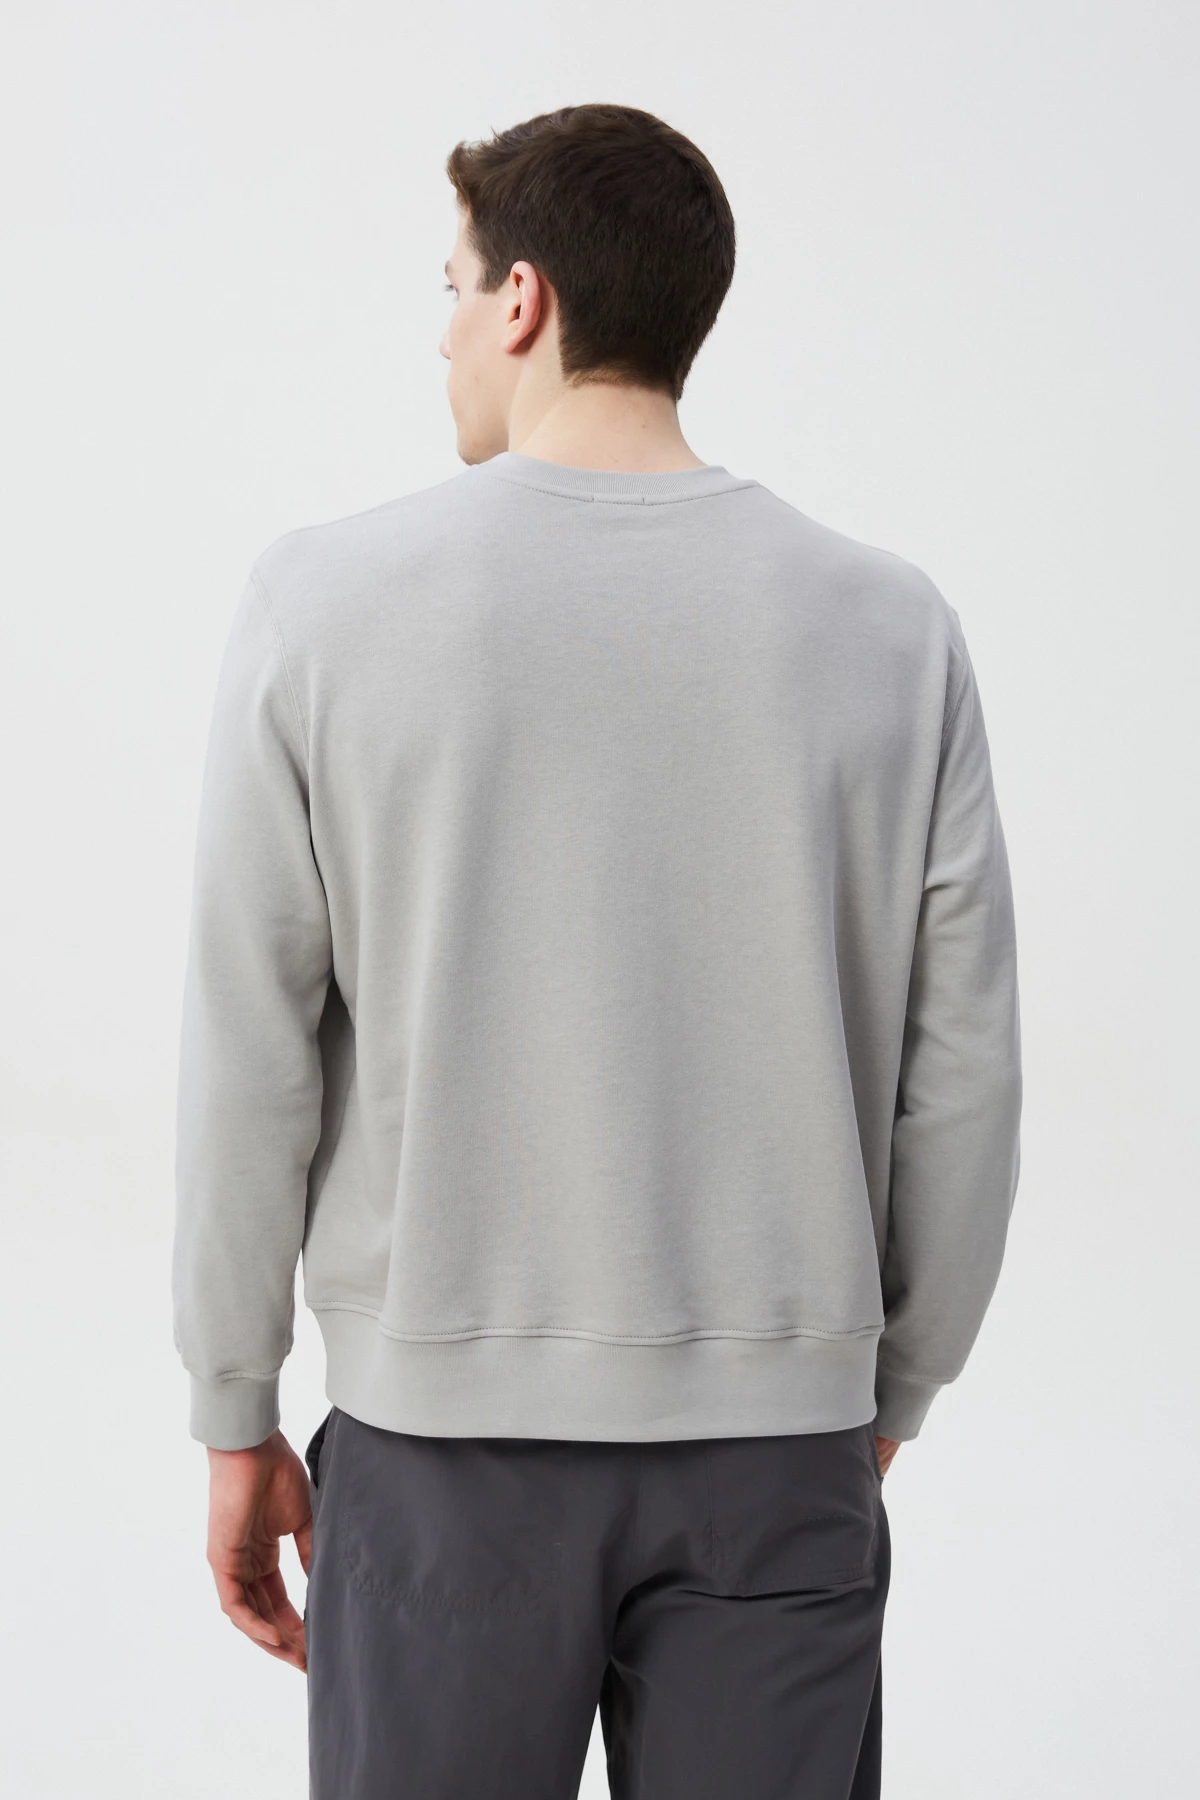 Grey unisex sweatshirt with "Independence" print, photo 9